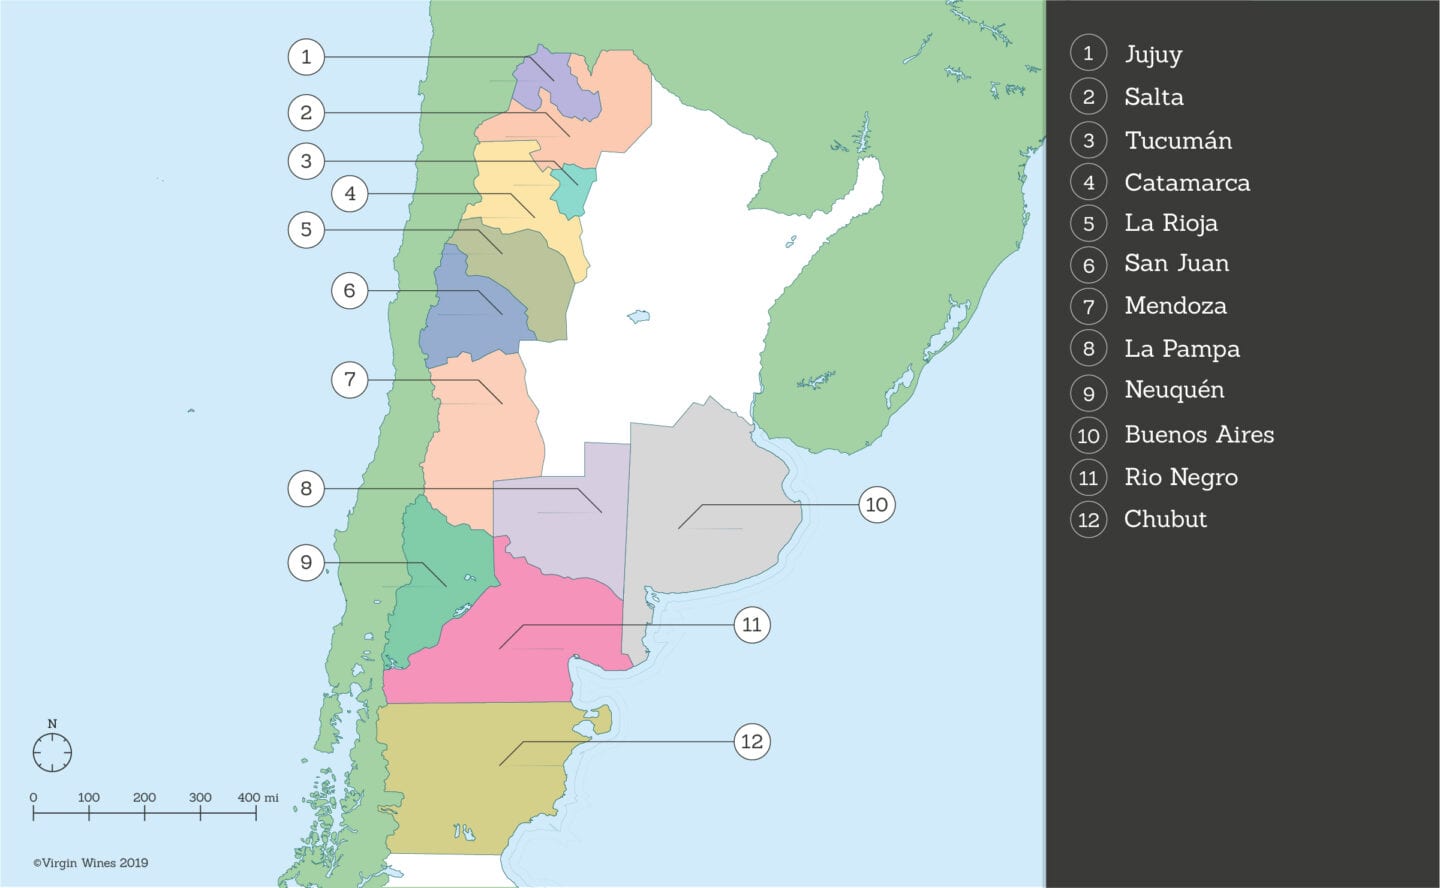 Argentinean Wine Regions Map